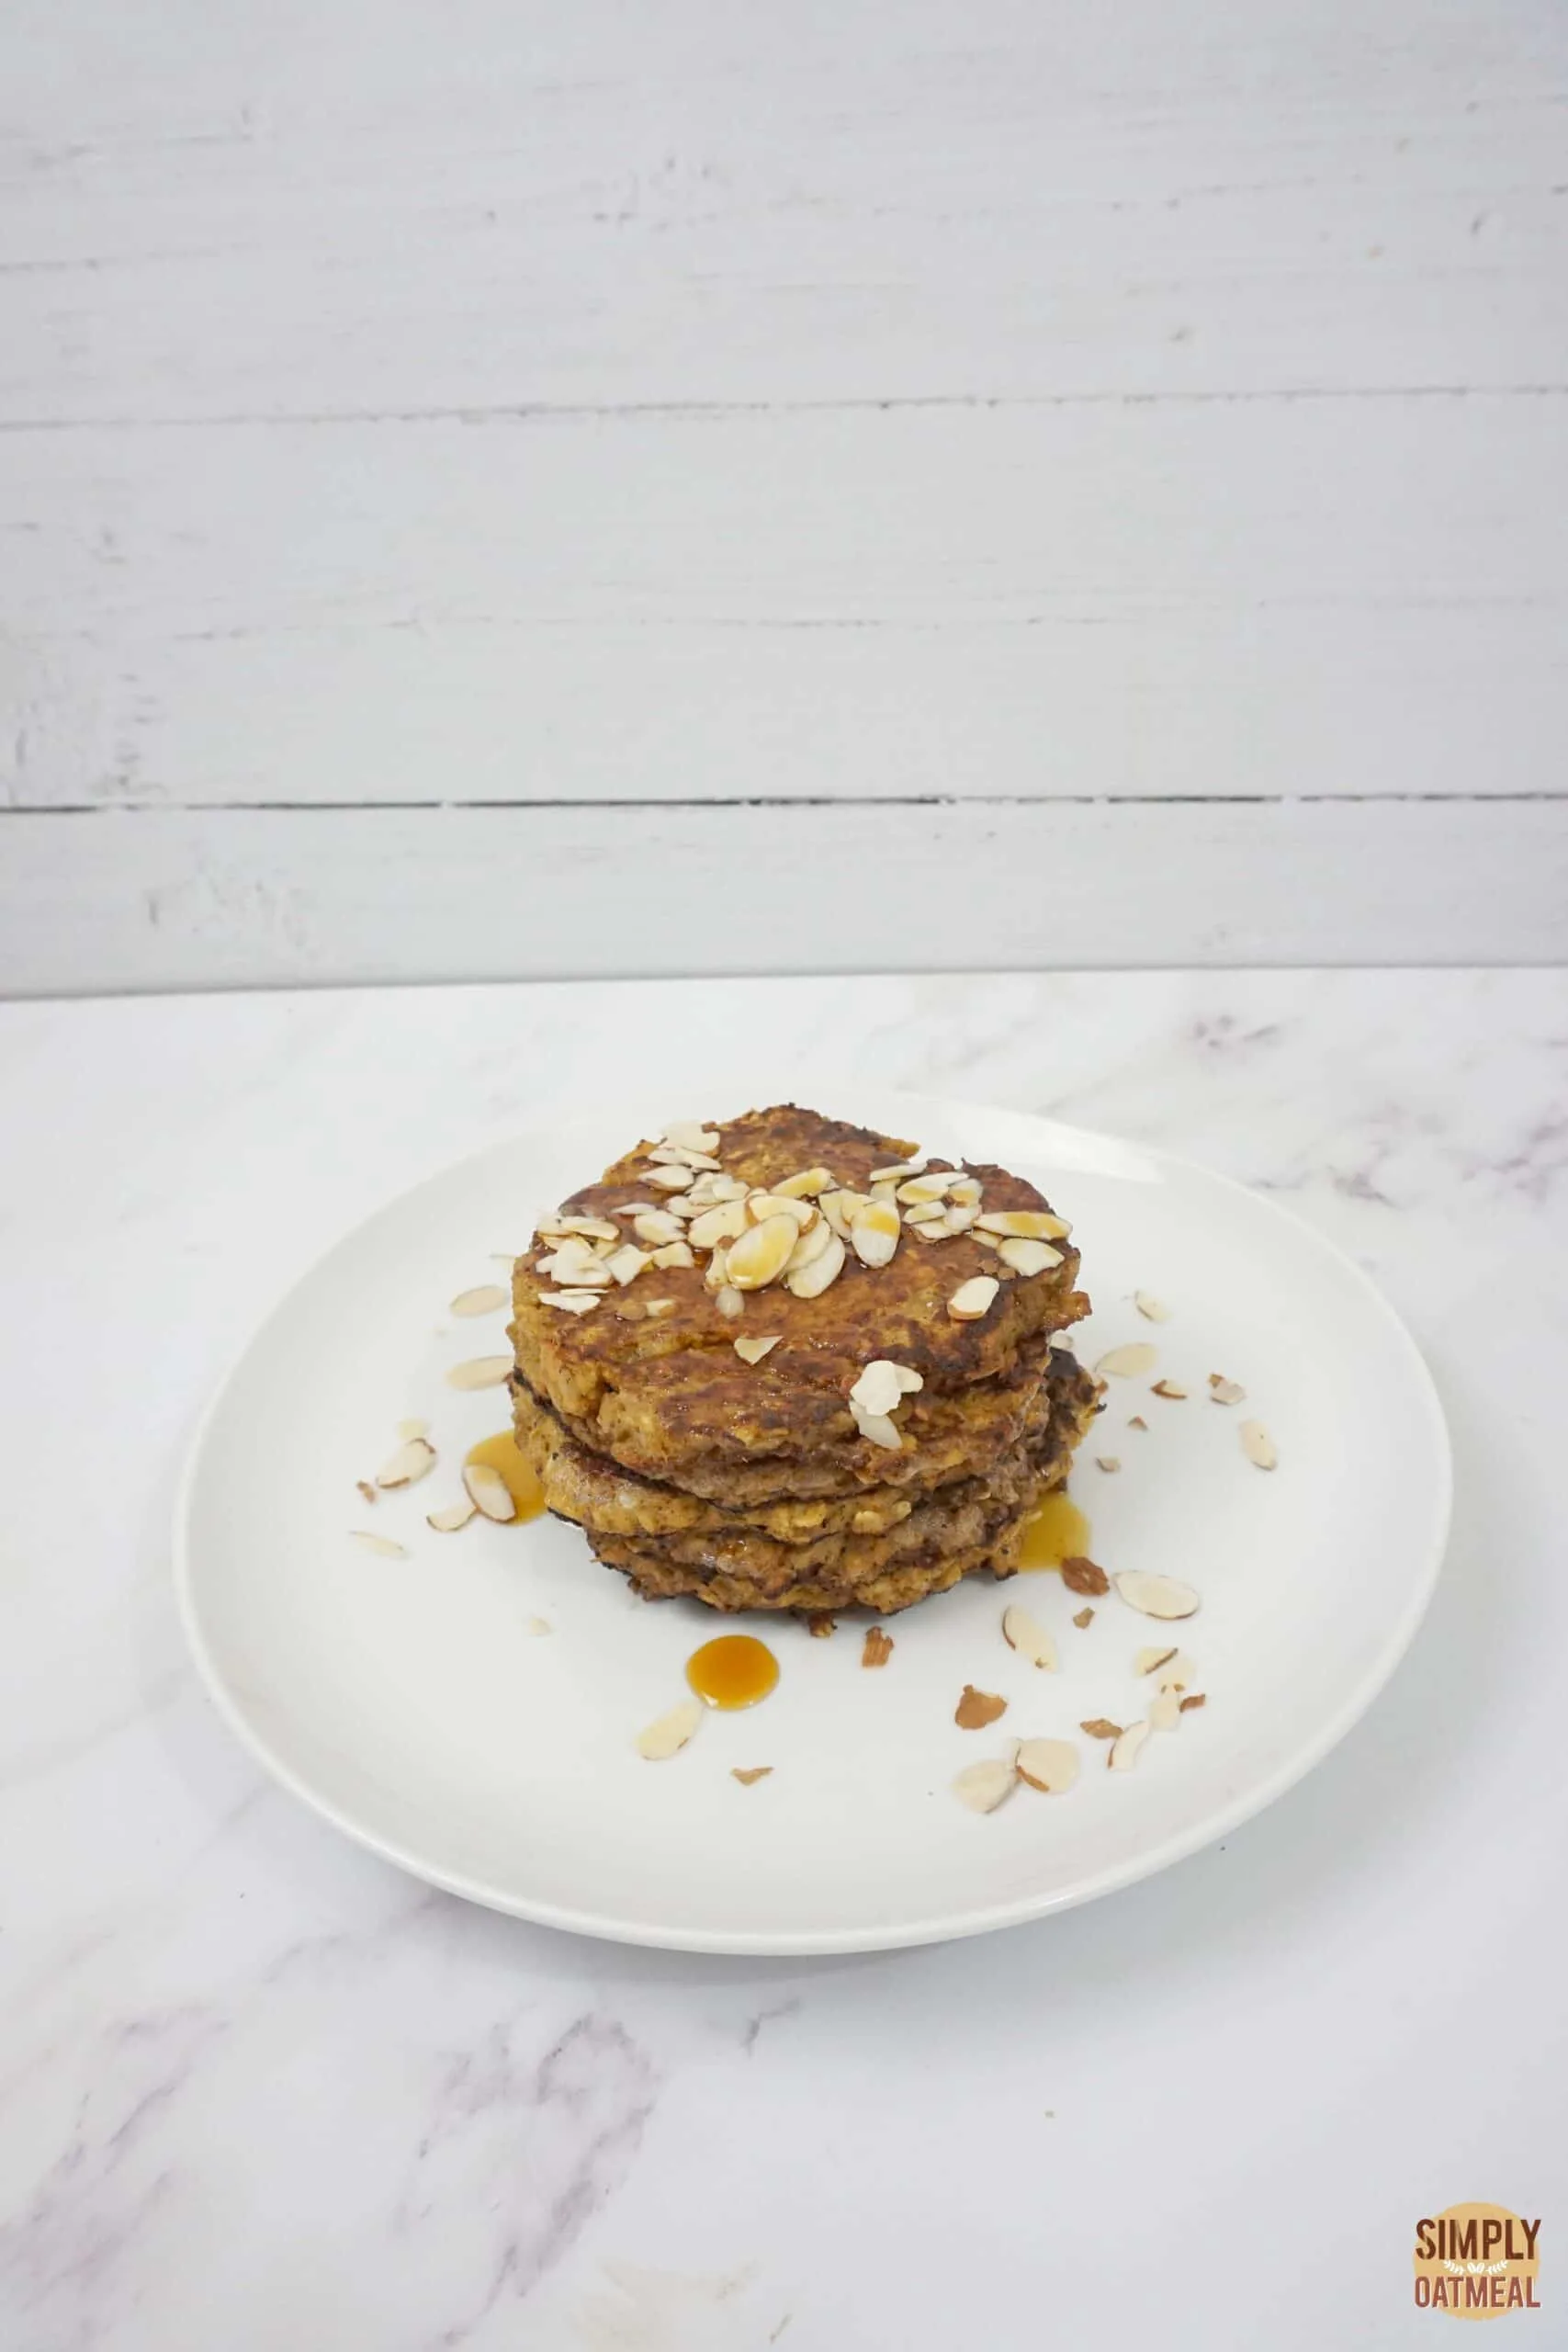 Sweet potato oatmeal pancakes with sliced almonds